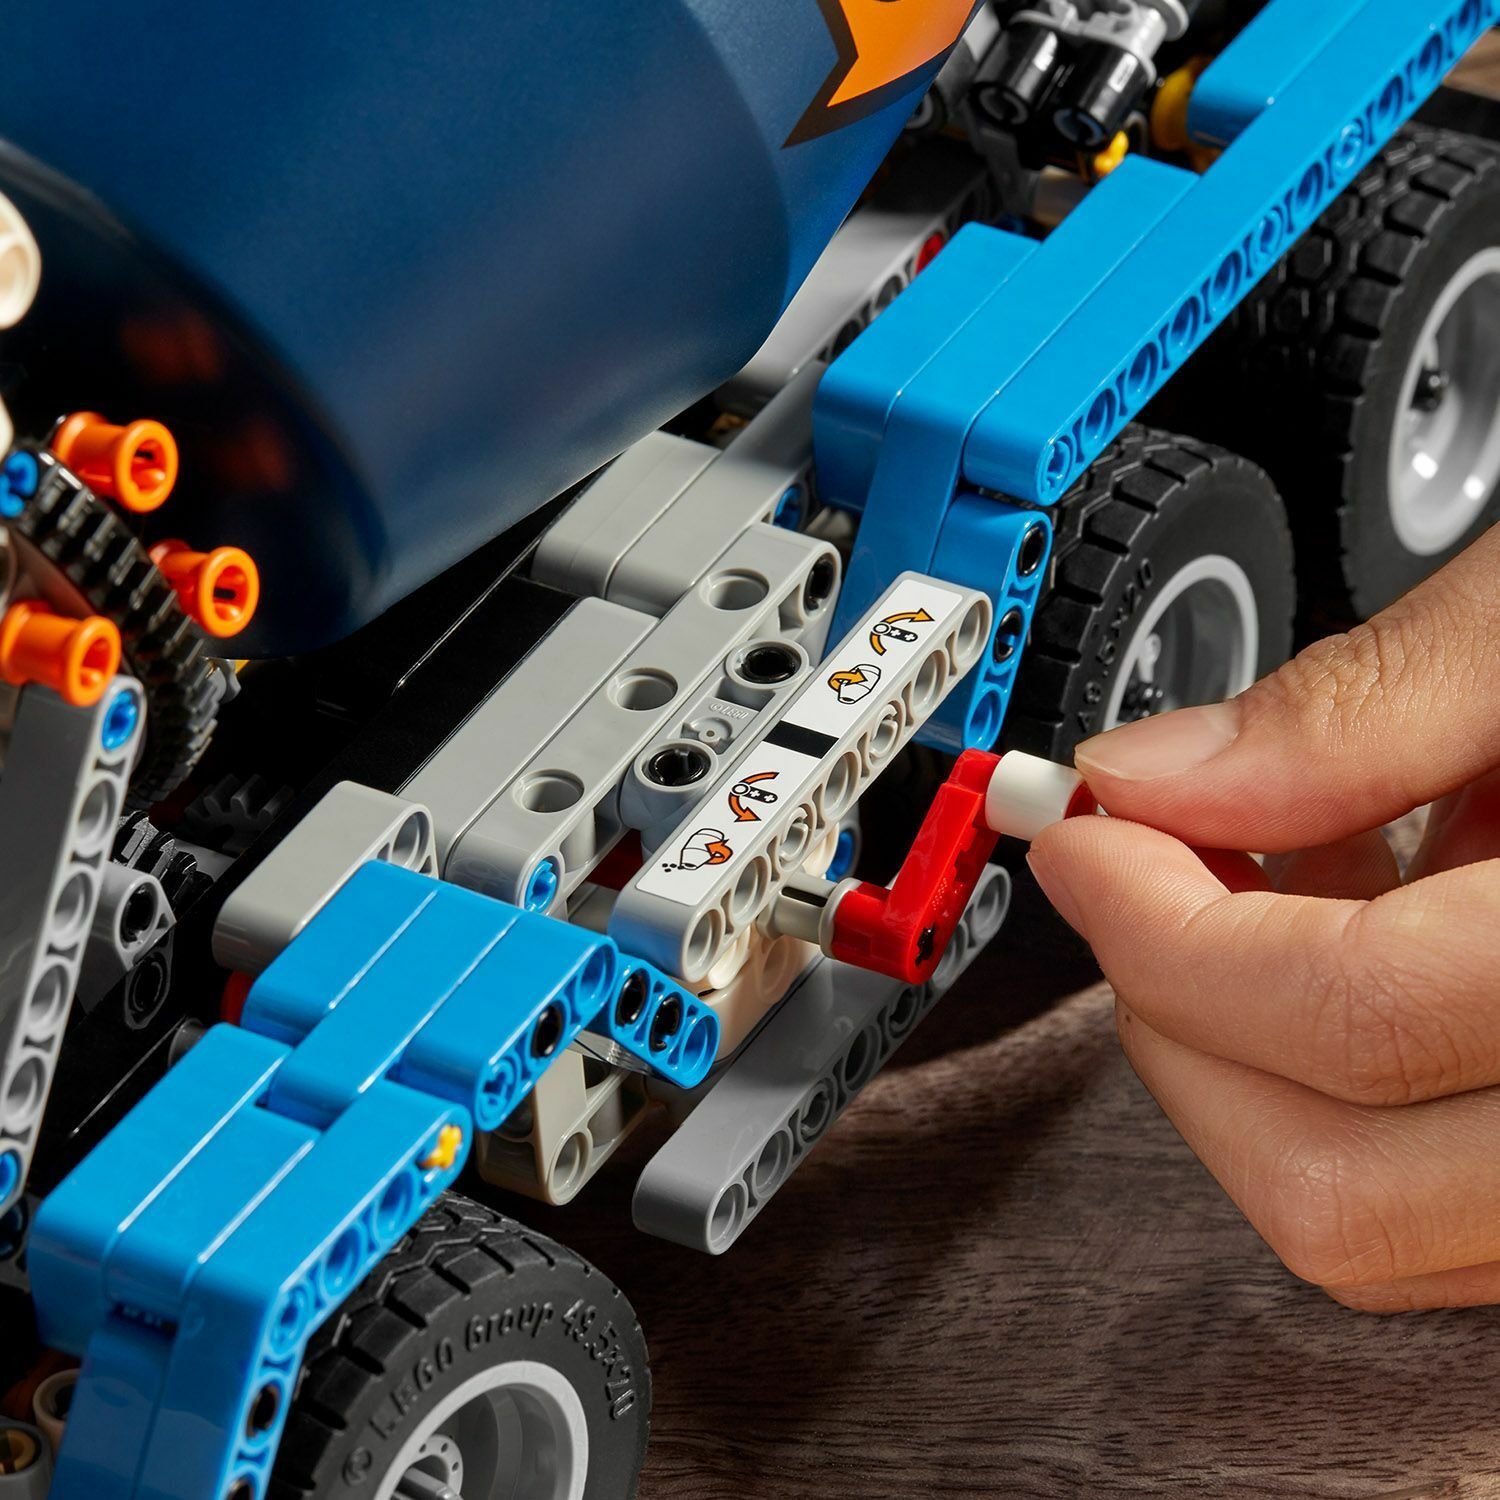 Lego Technic 42112 Бетономешалка